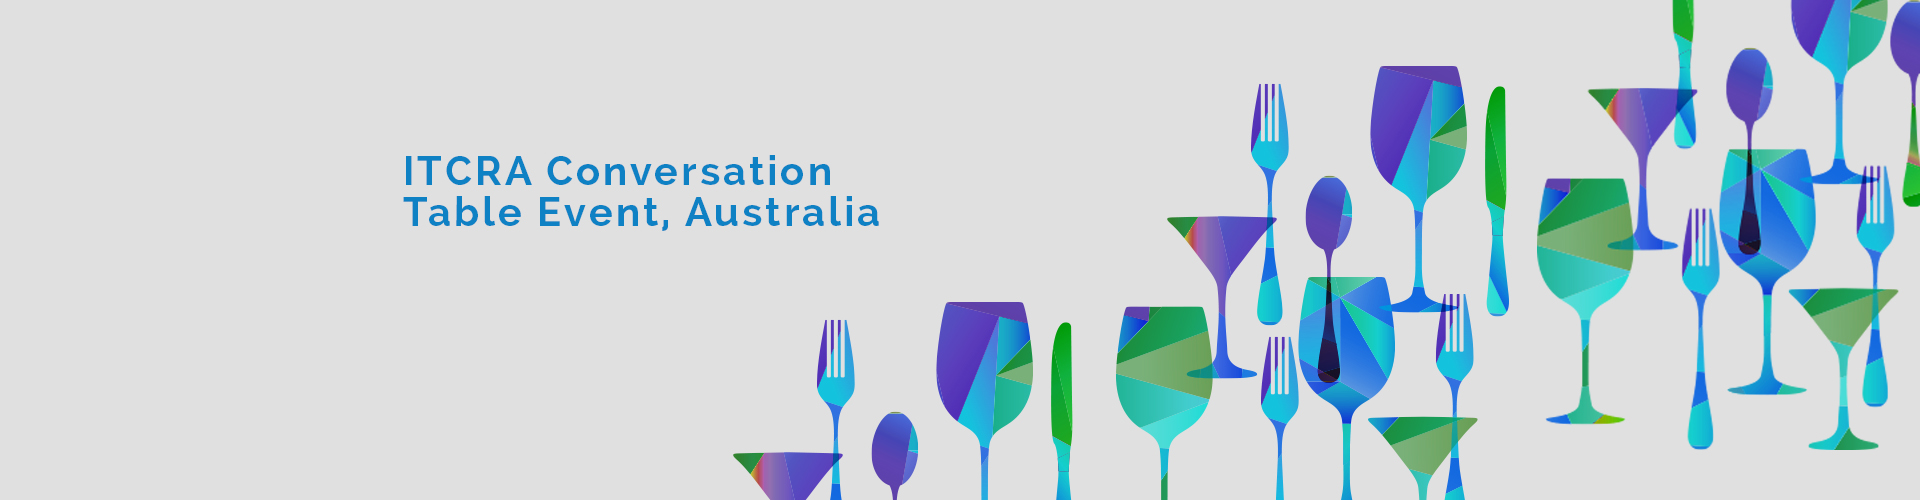 ITCRA Conversation Table Event, Australia